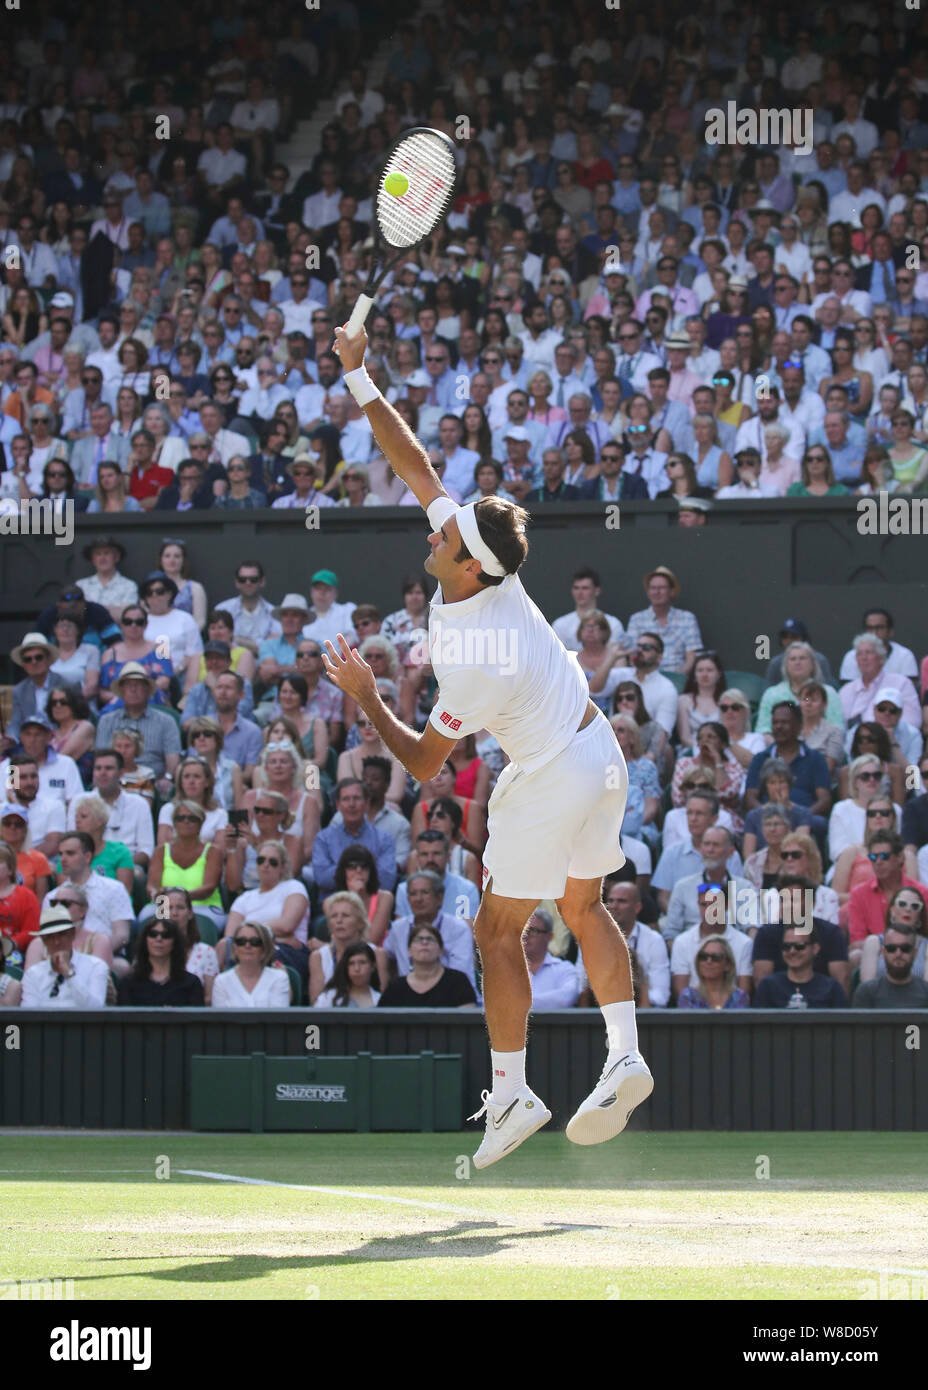 Schweizer Tennisspieler Roger Federer spielen Service Schuß während 2019 Wimbledon Championships, London, England, Vereinigtes Königreich Stockfoto